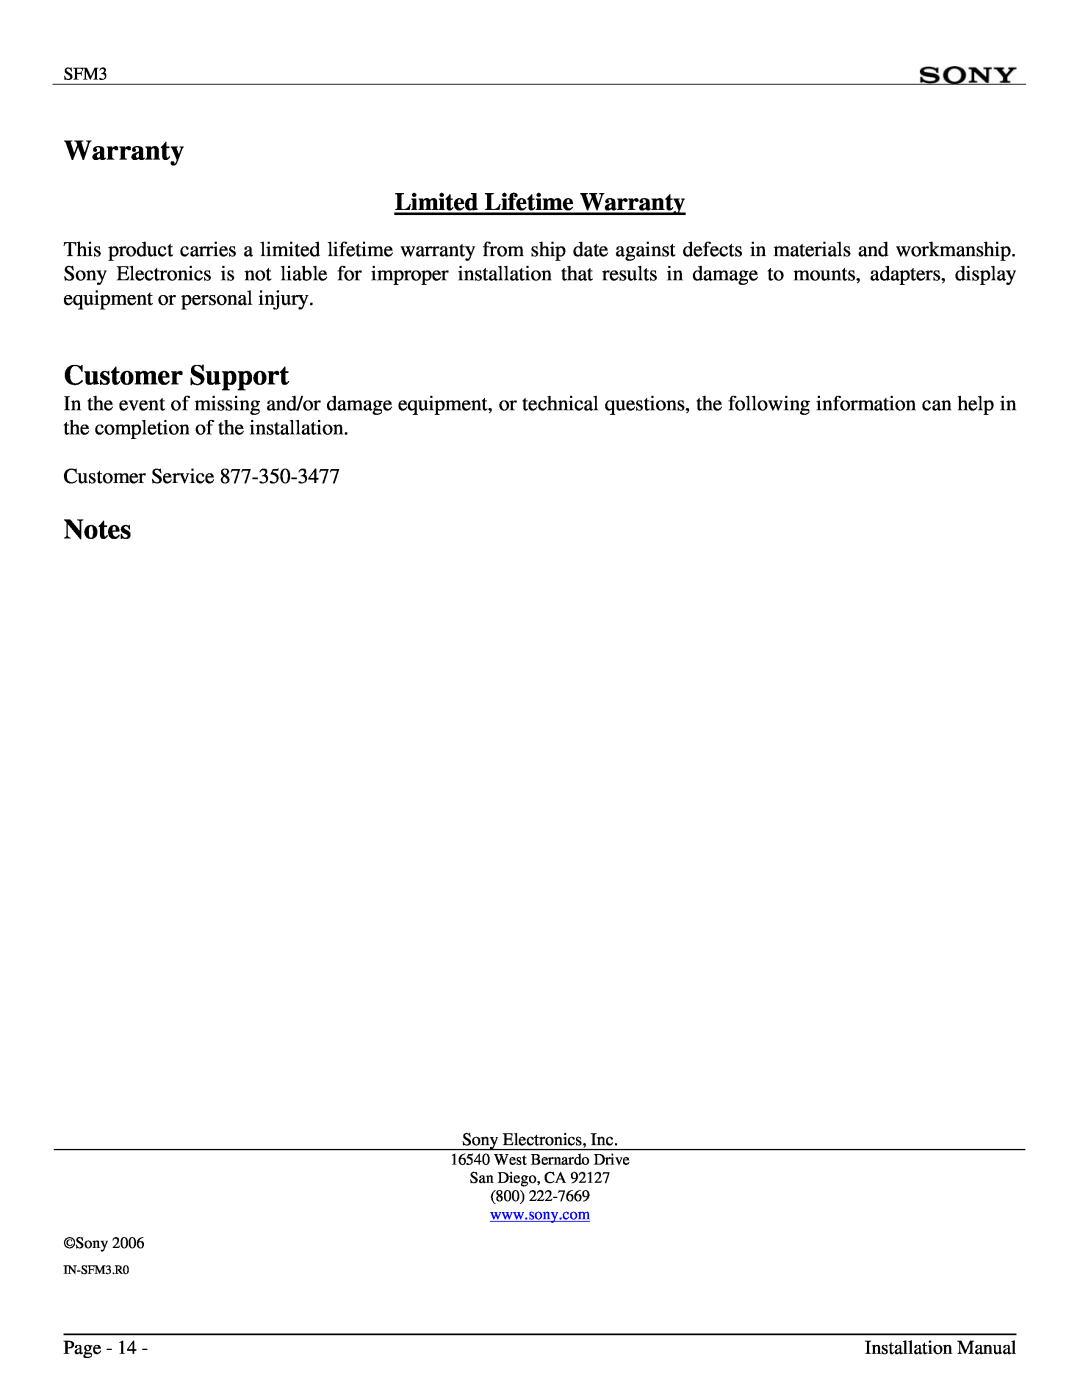 Sony SFM3 installation manual Customer Support, Limited Lifetime Warranty 